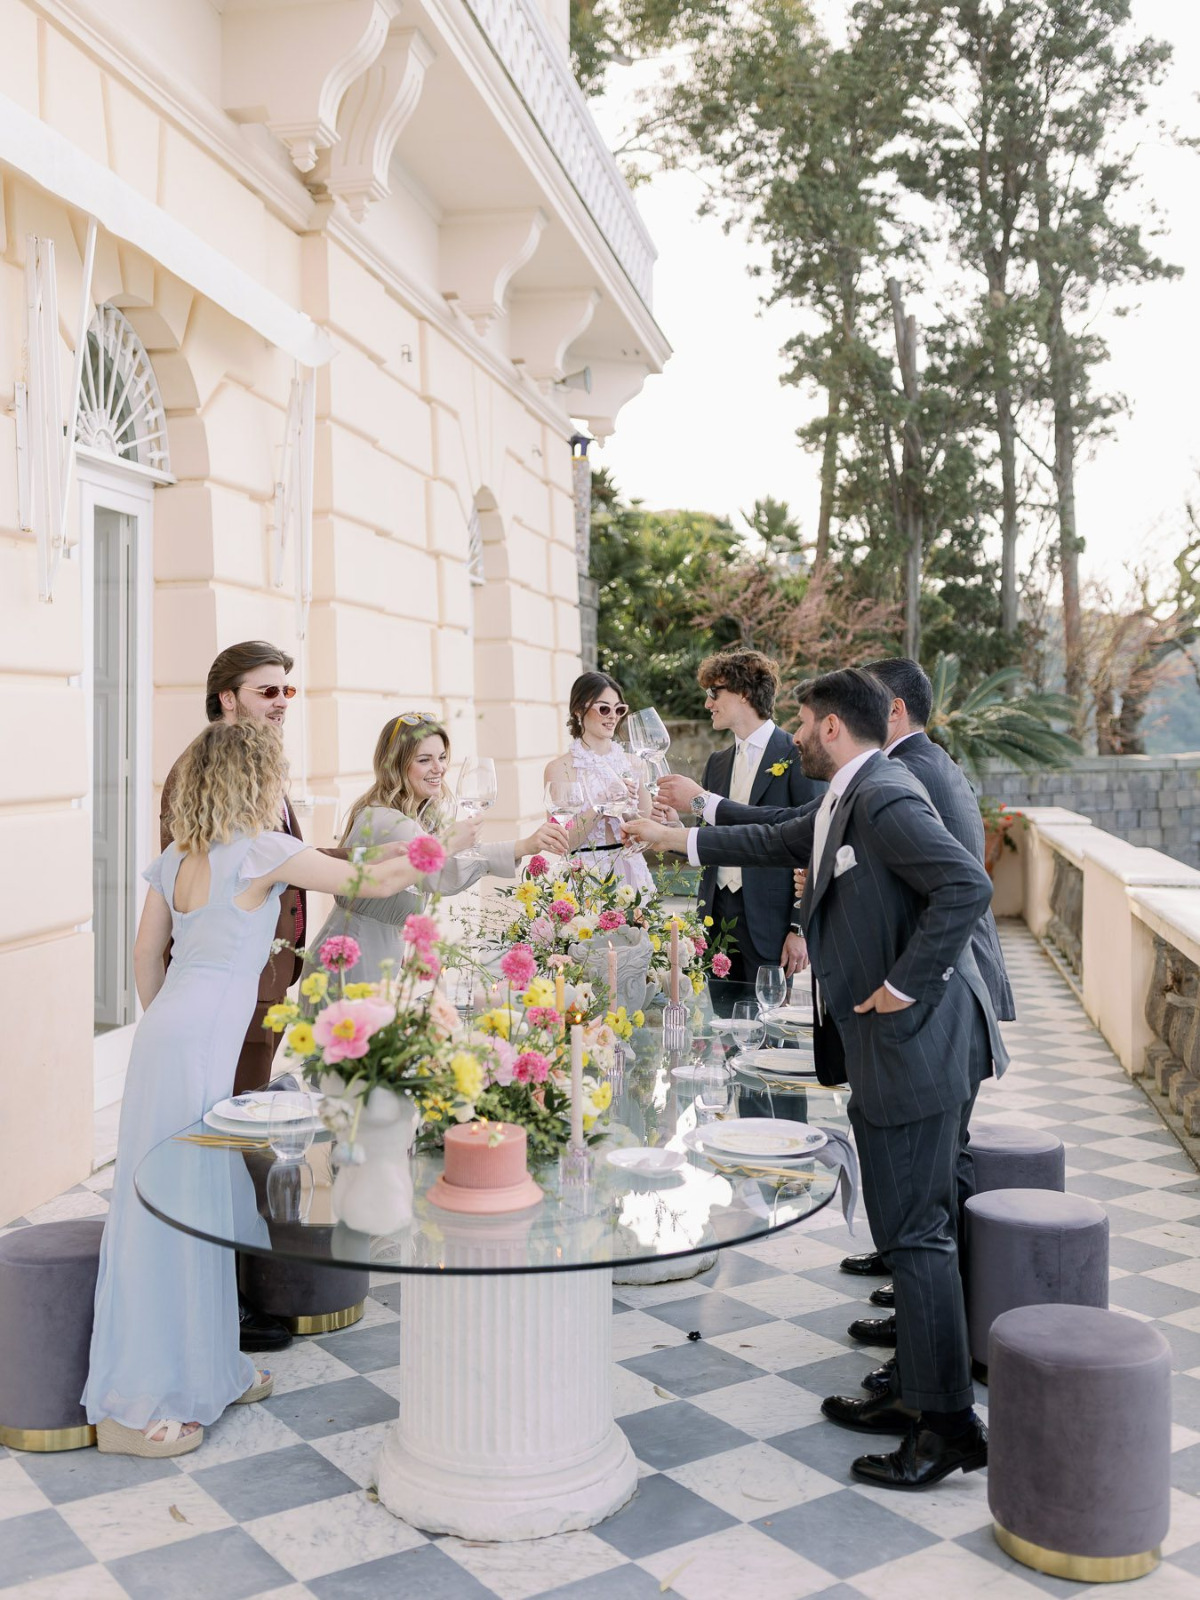 Sunset villa wedding reception